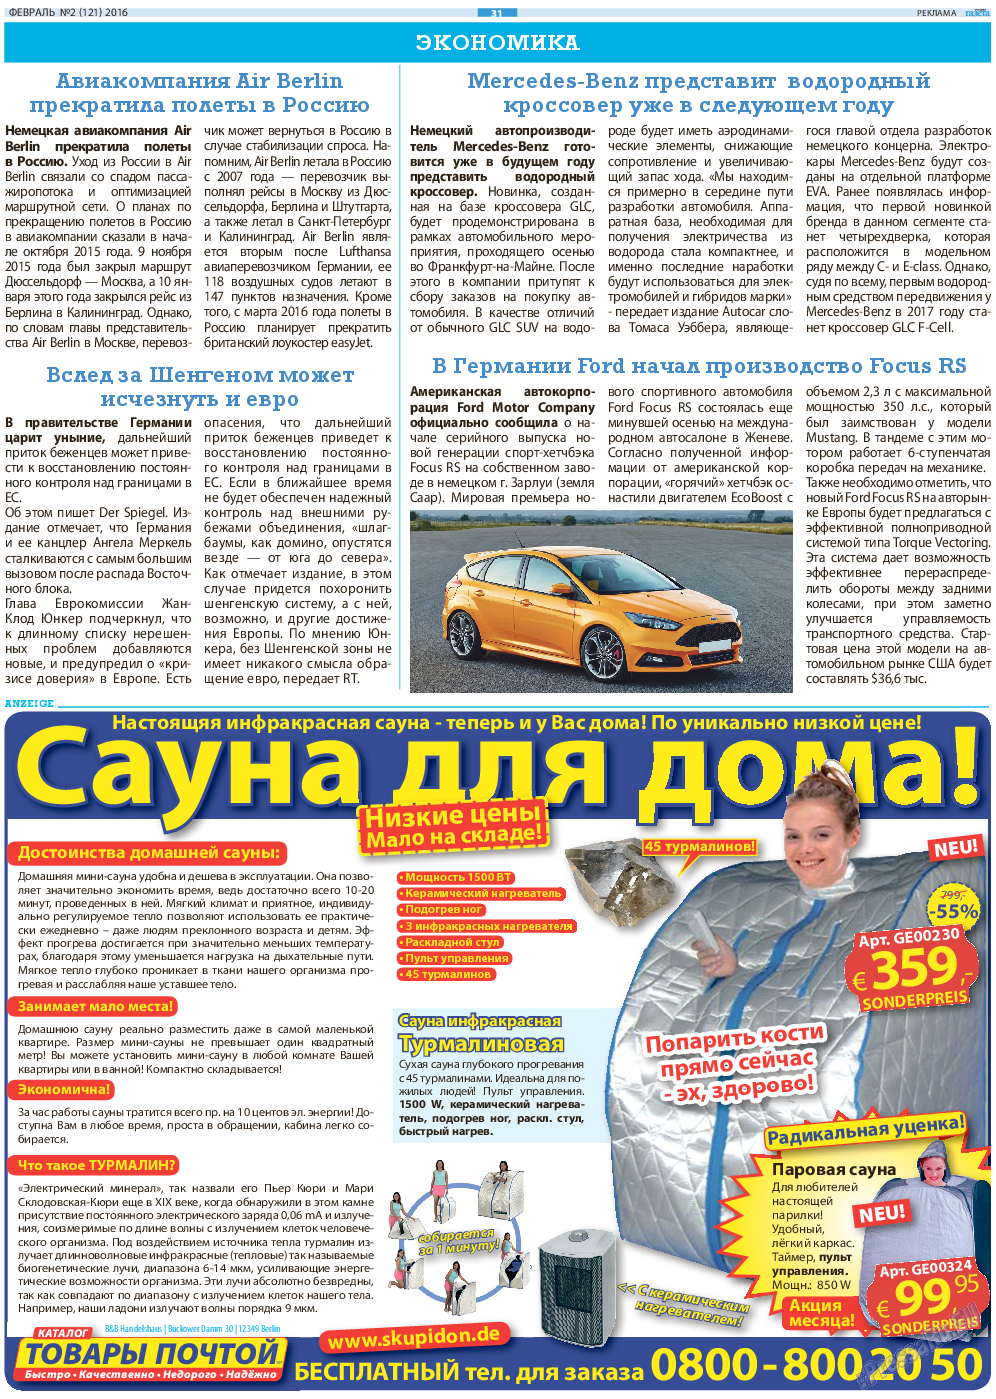 Русская Газета, газета. 2016 №2 стр.31